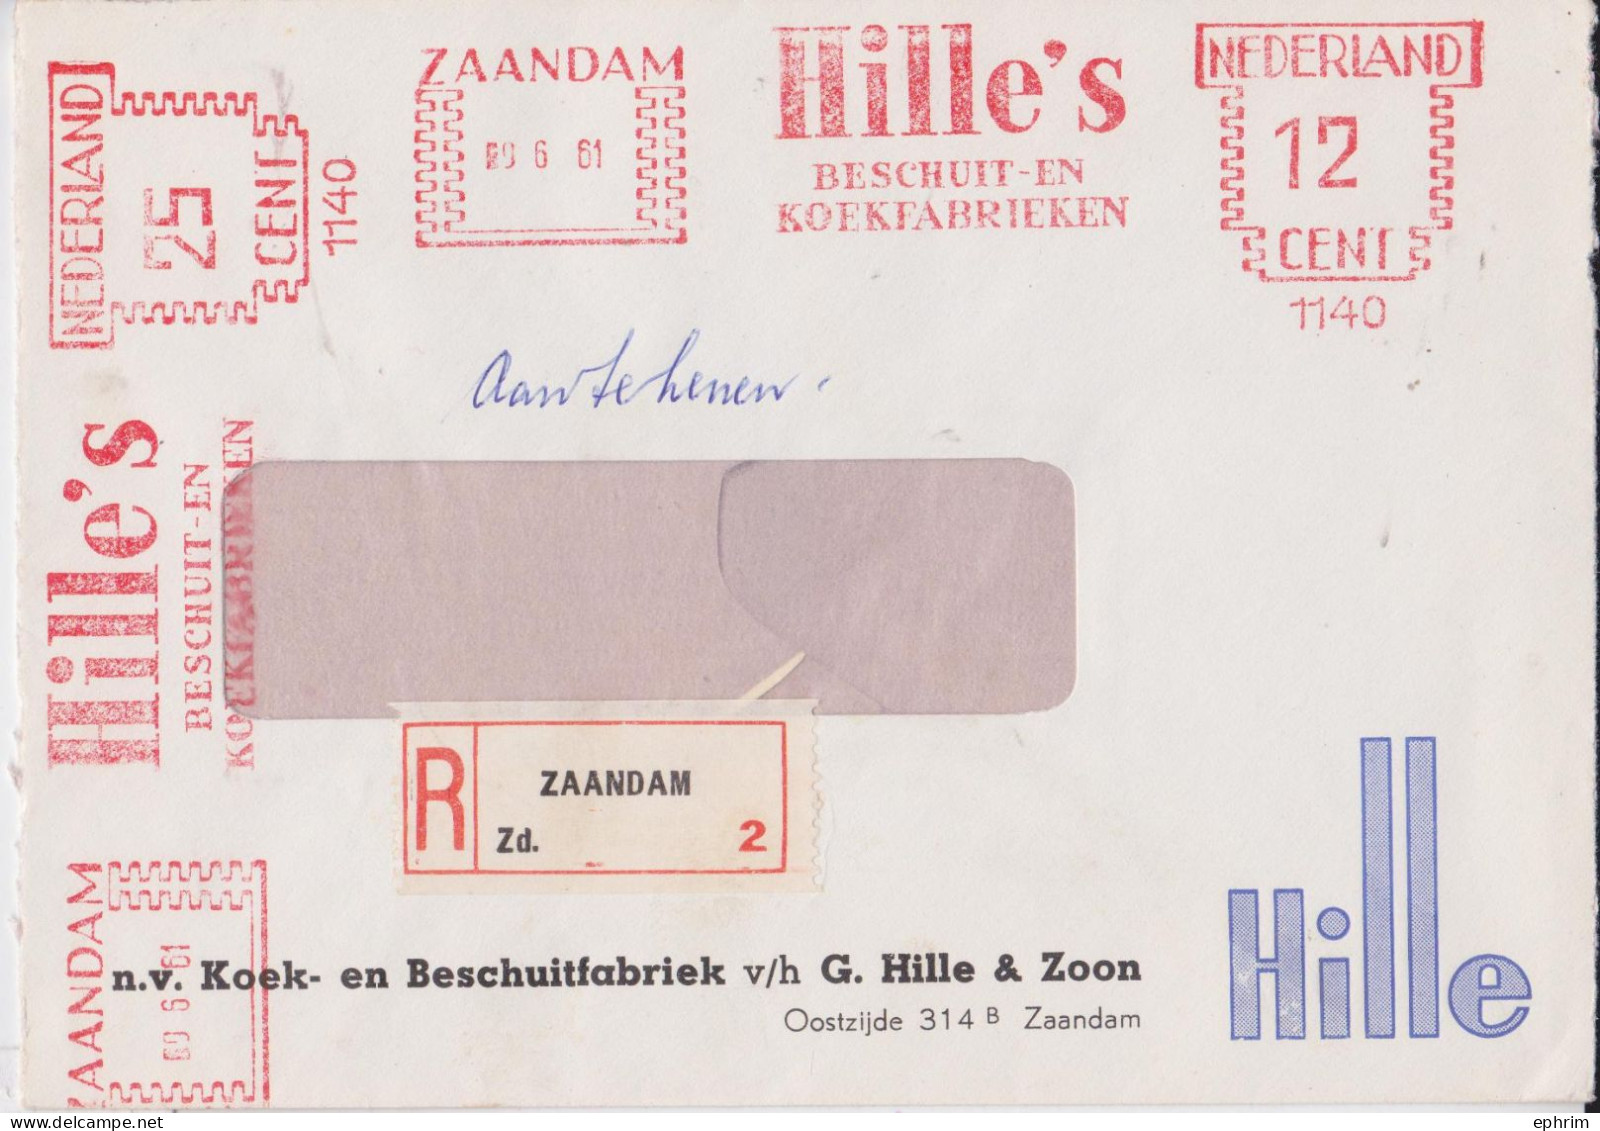 Zaandam Hille's Nederland Ema Red Meter Machine Mail Stampless Registered Cover Lettre Affranchissement Mécanique 1961 - Frankeermachines (EMA)